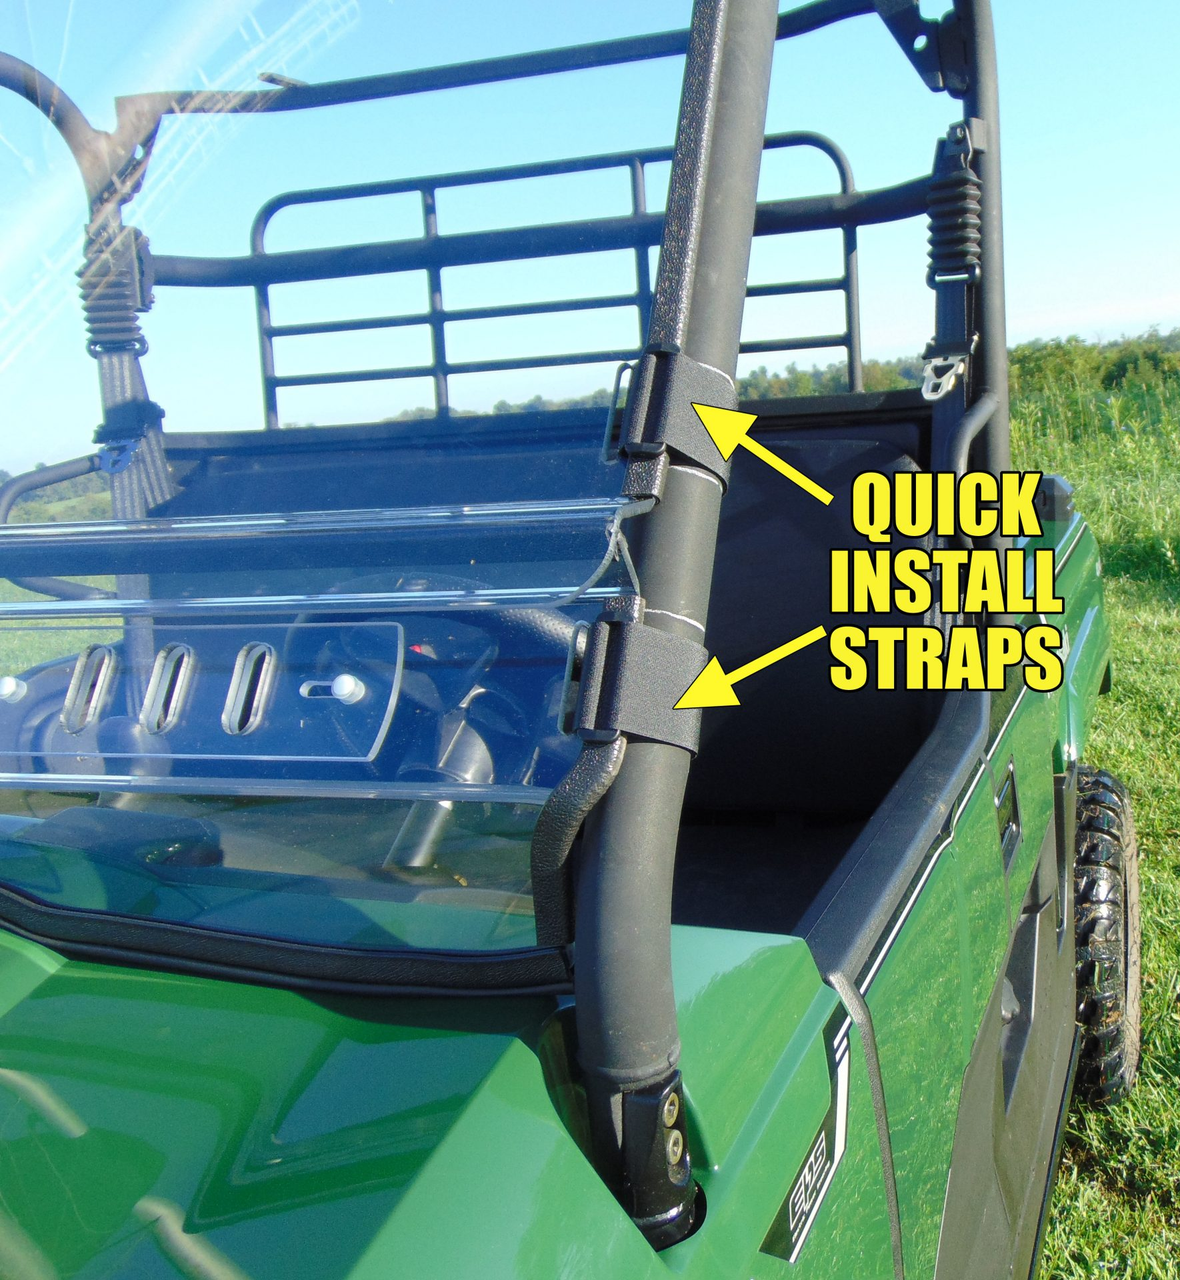 3 Star side x side CF Moto U-Force 1000 windshield quick install straps